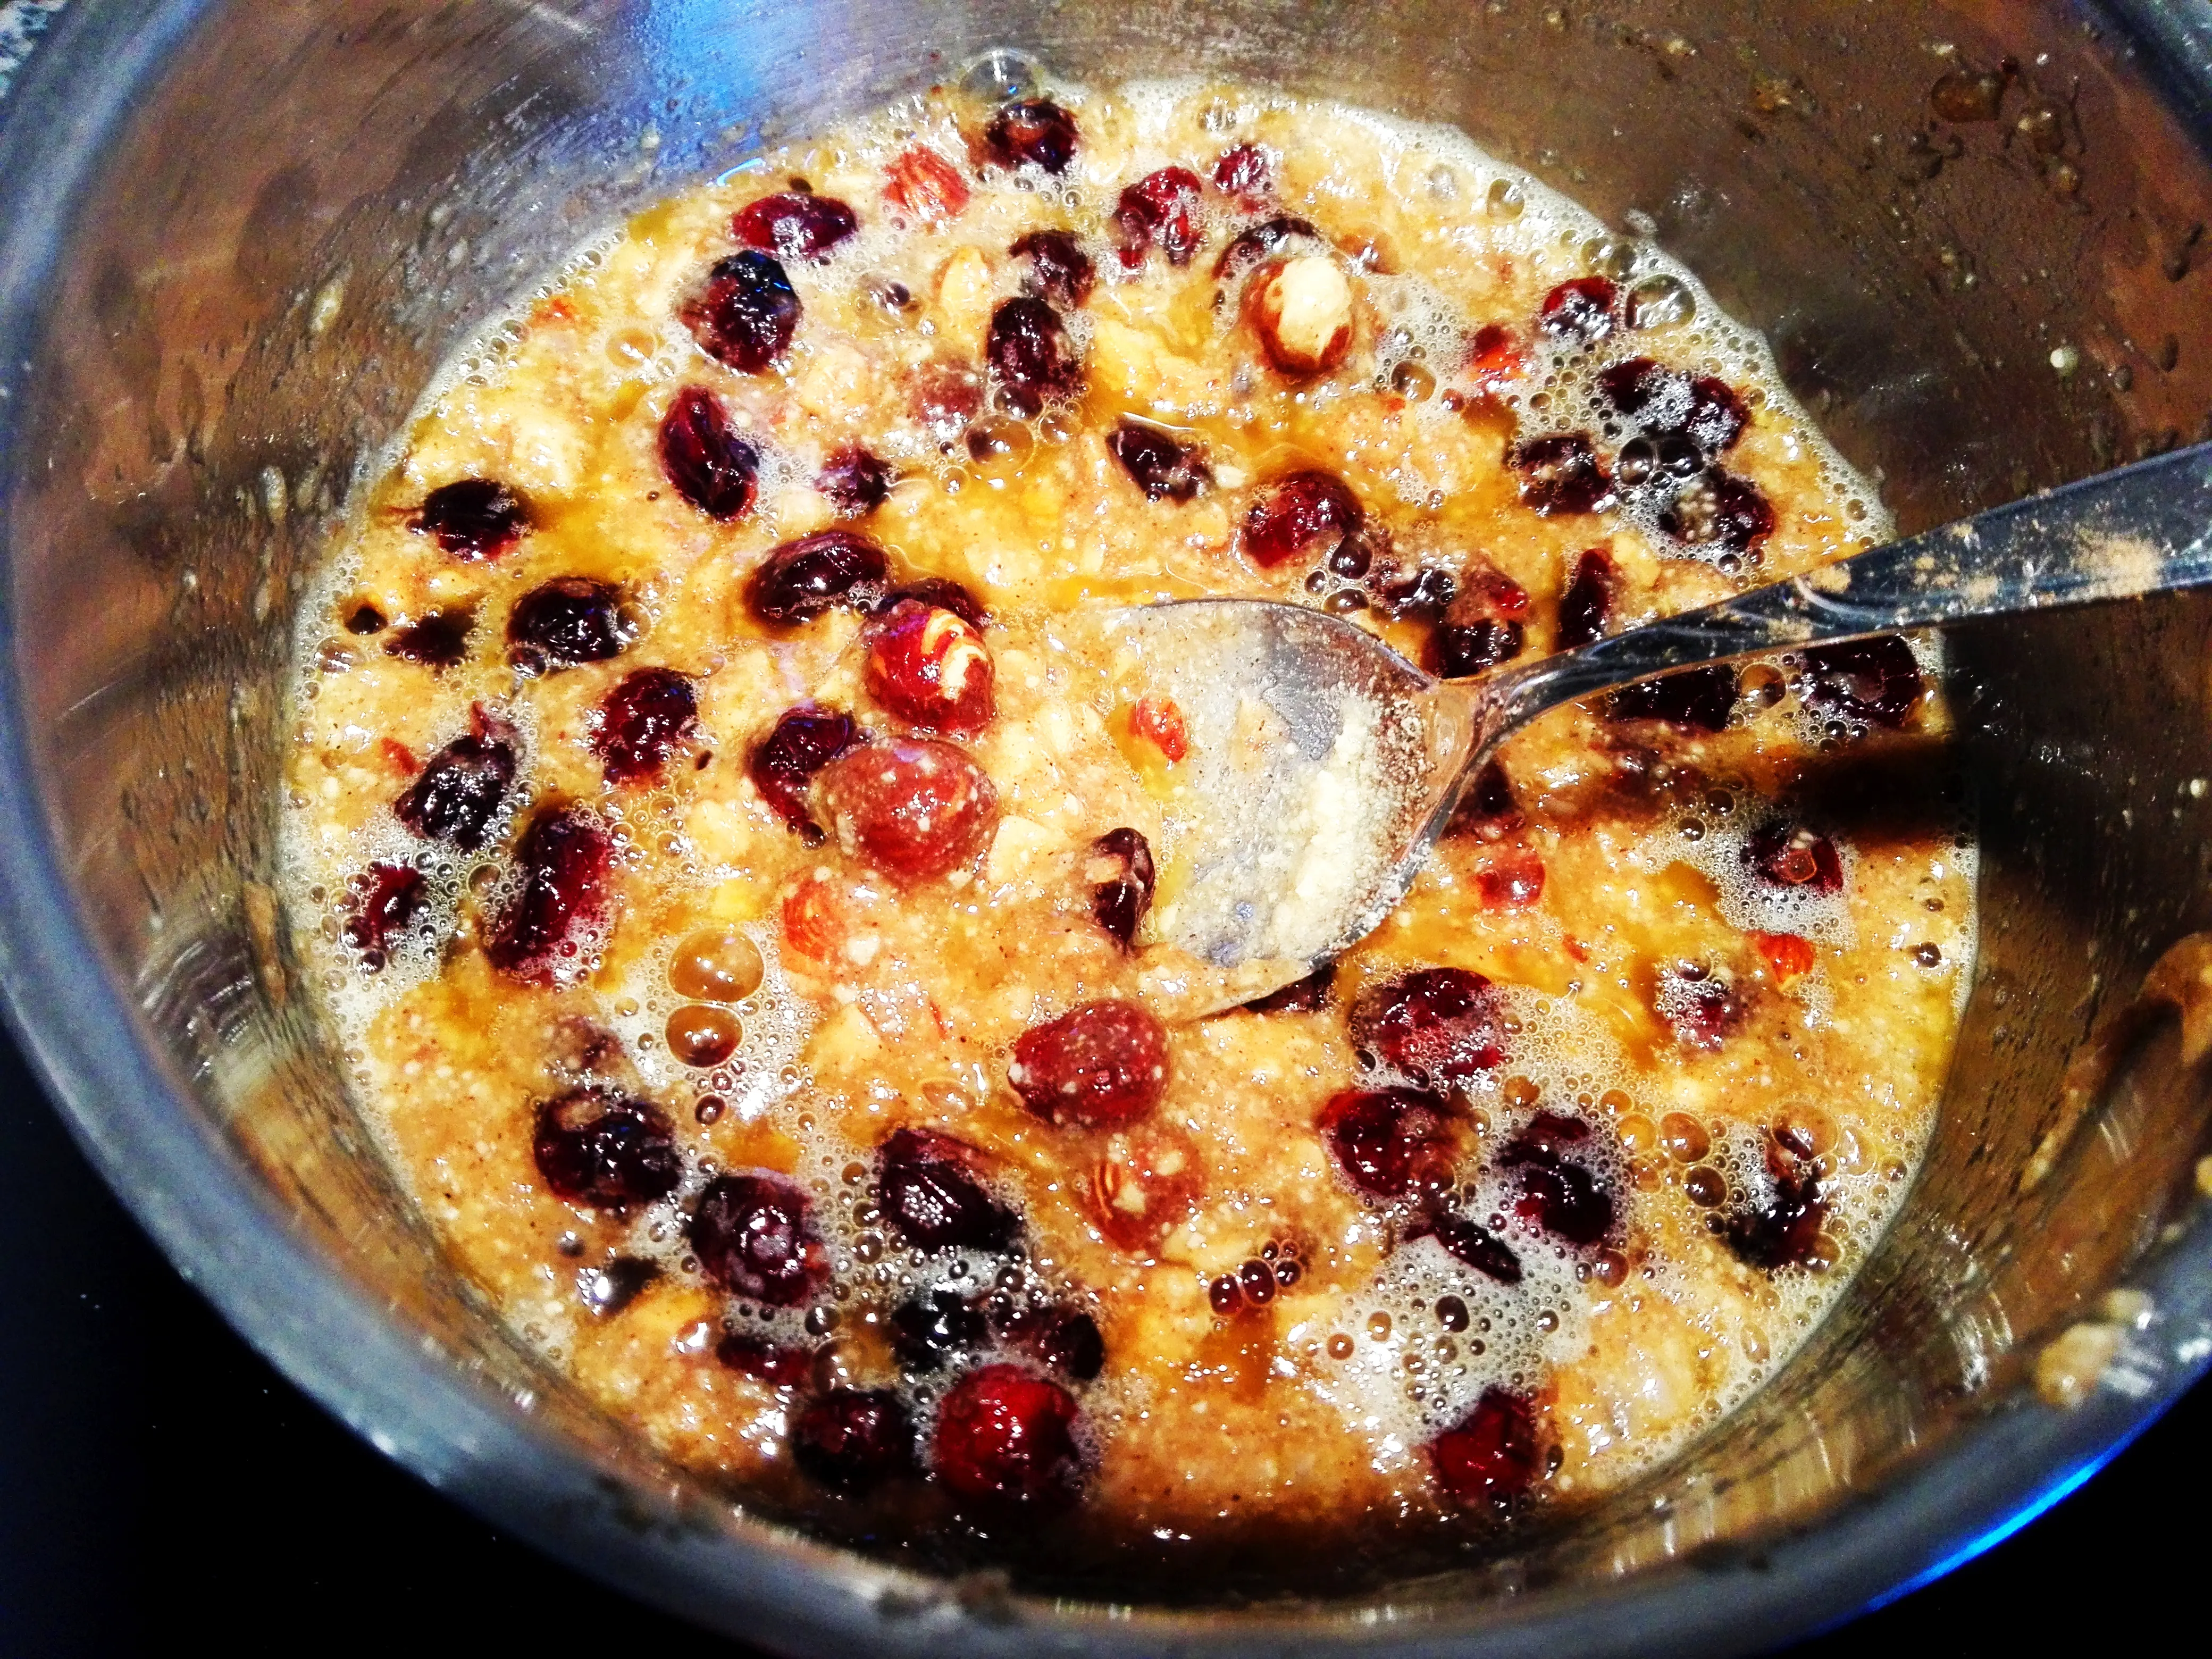 Veganes Bratapfel Rezept - Bratapfel Füllung -Cranberries am kochen